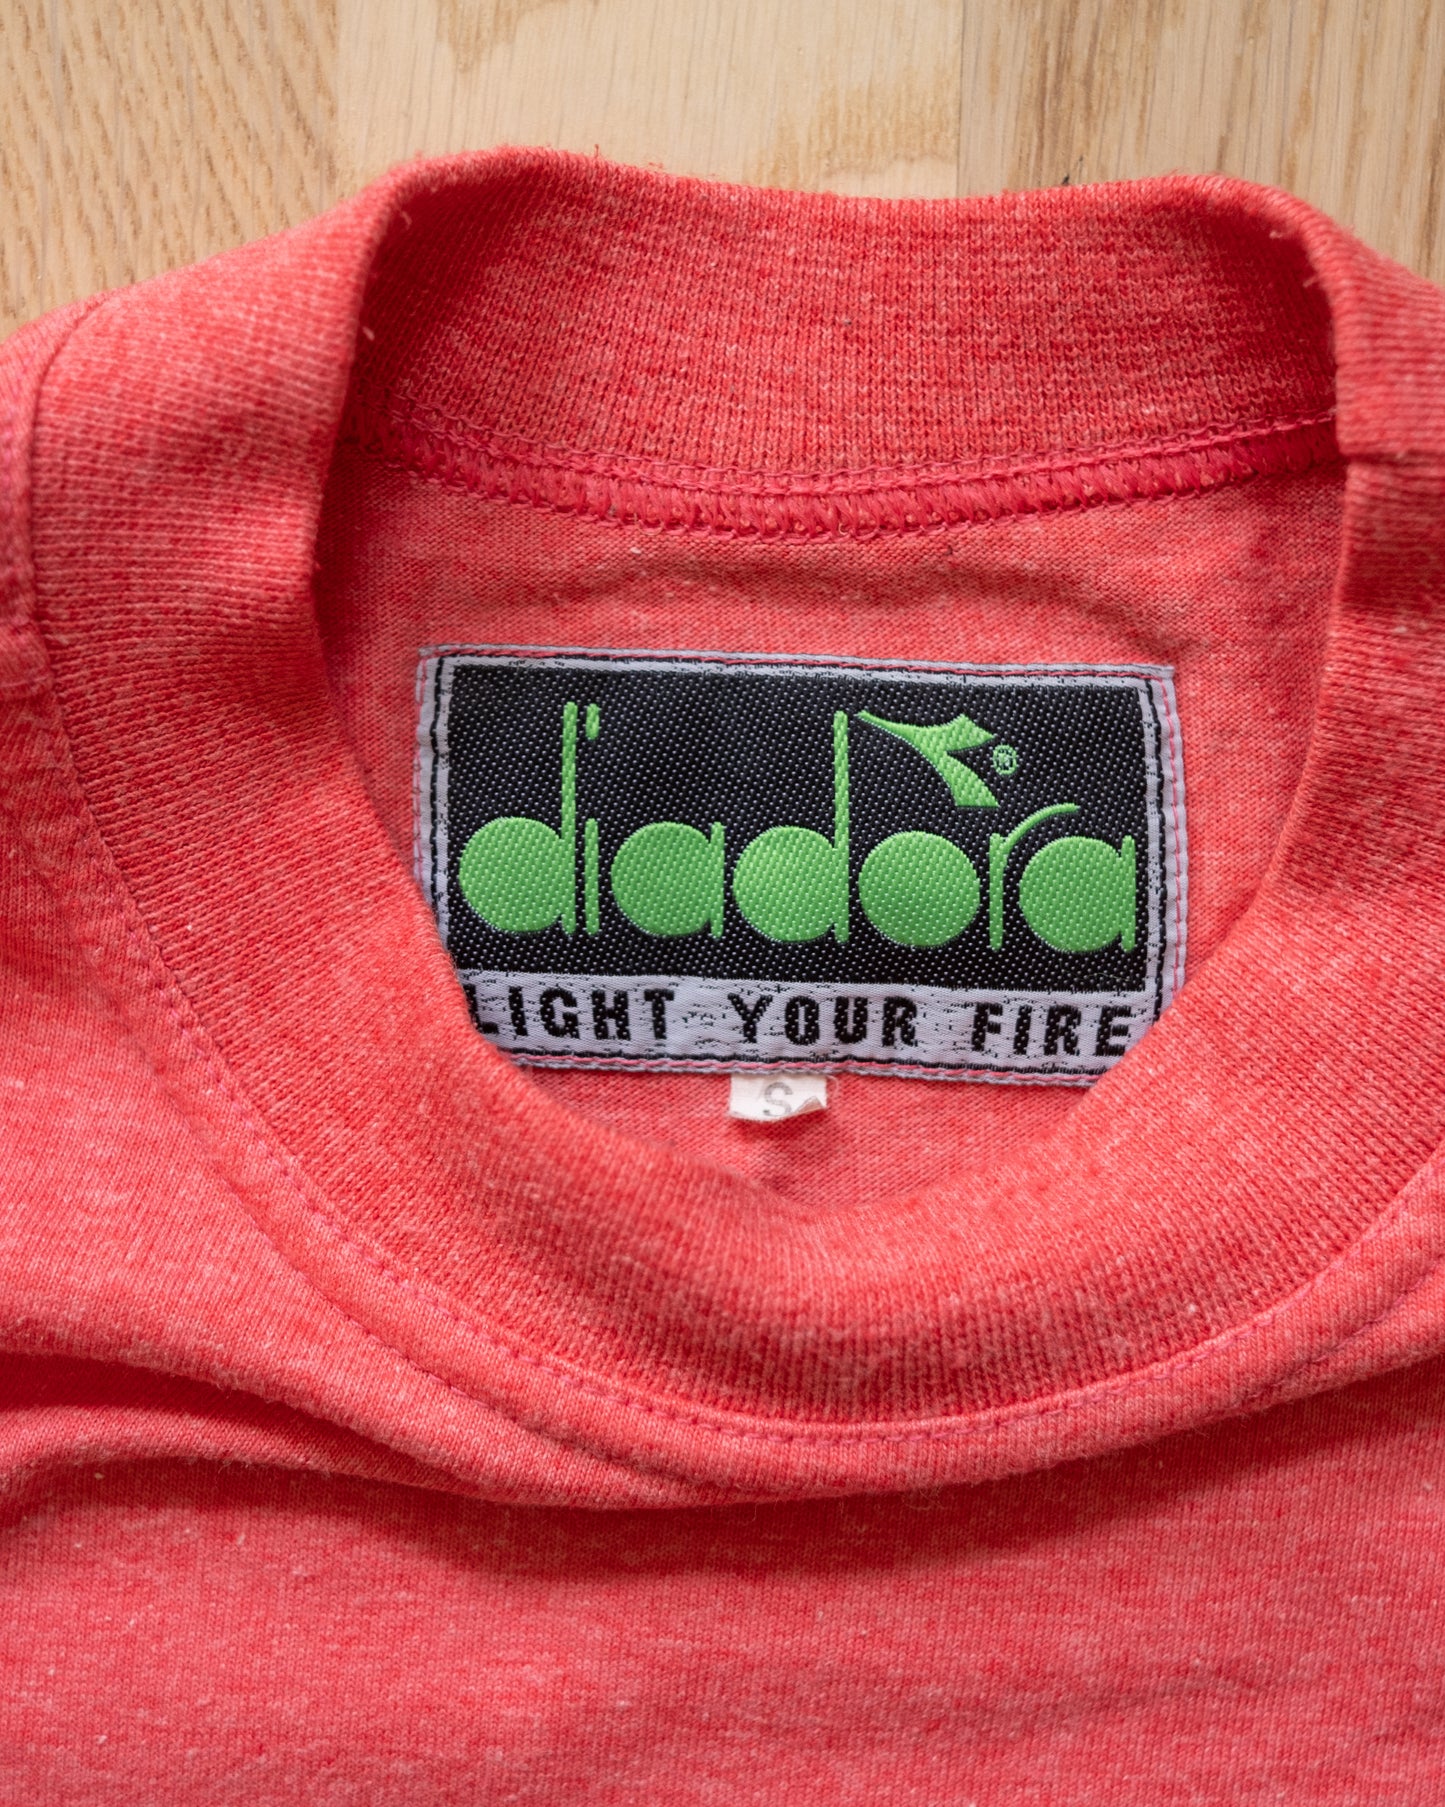 Diadora 'Light Your Fire' Vintage Oversized Tee Size S